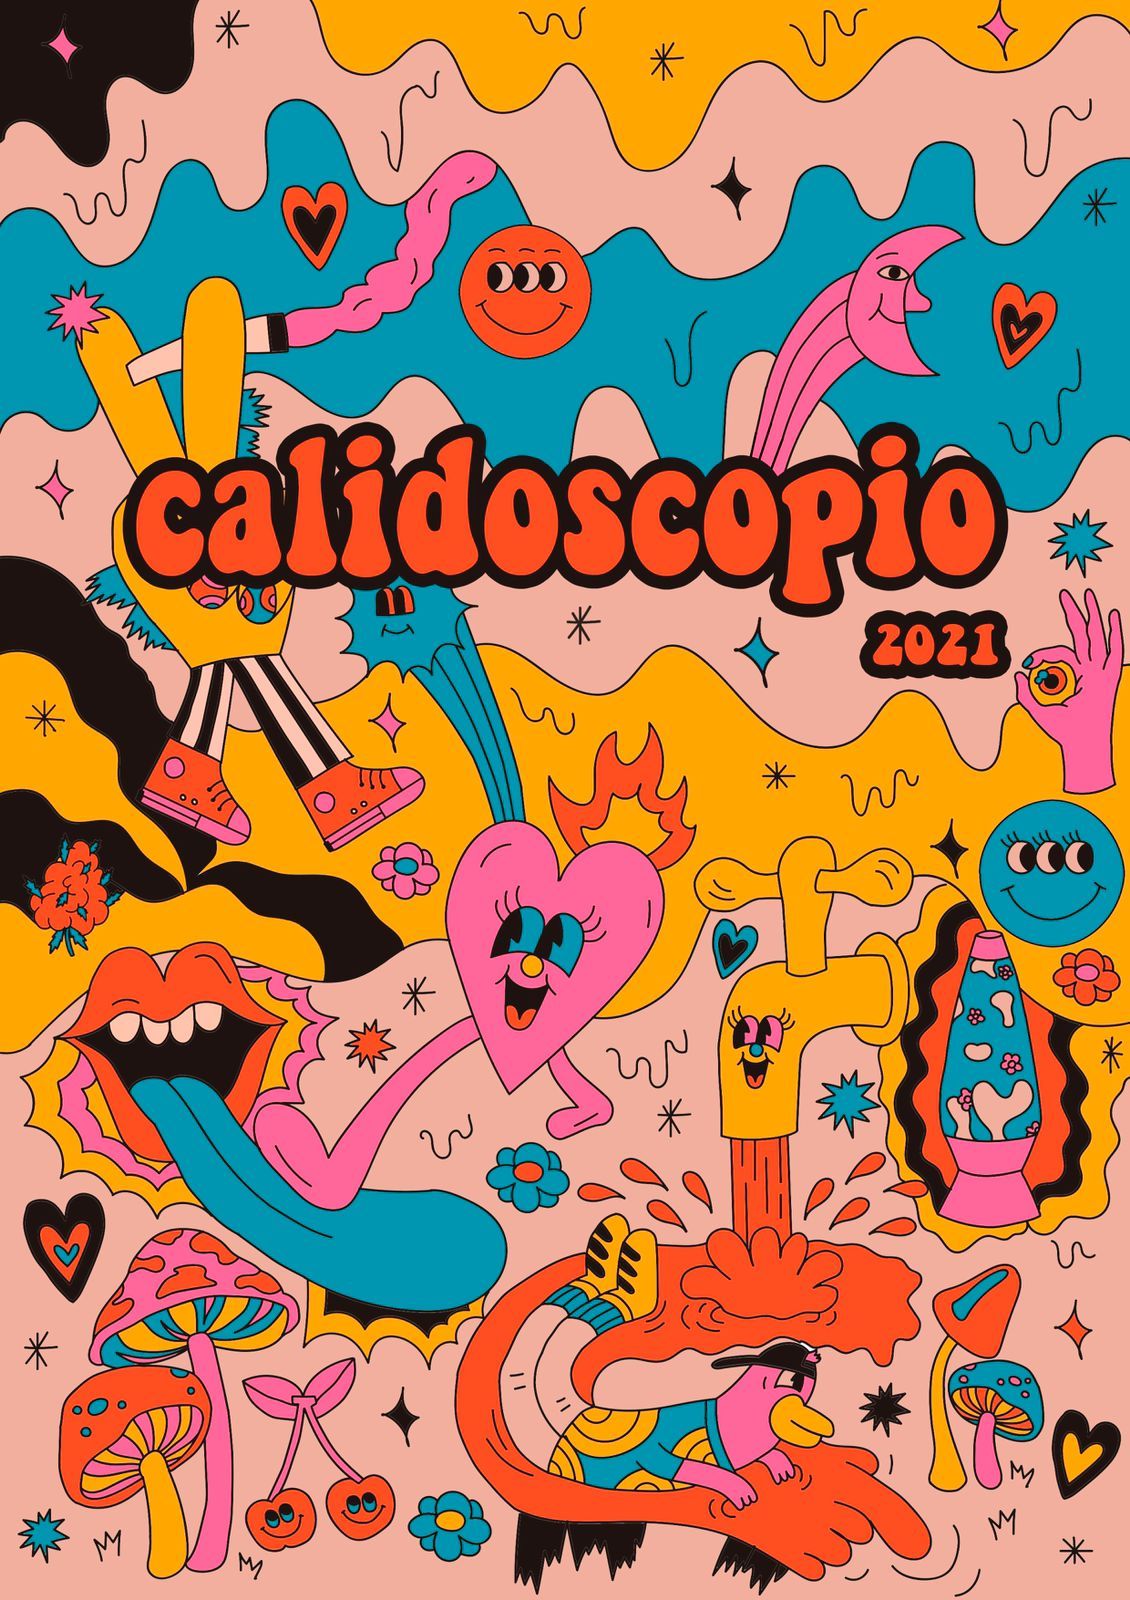 Calidoscopio 2021